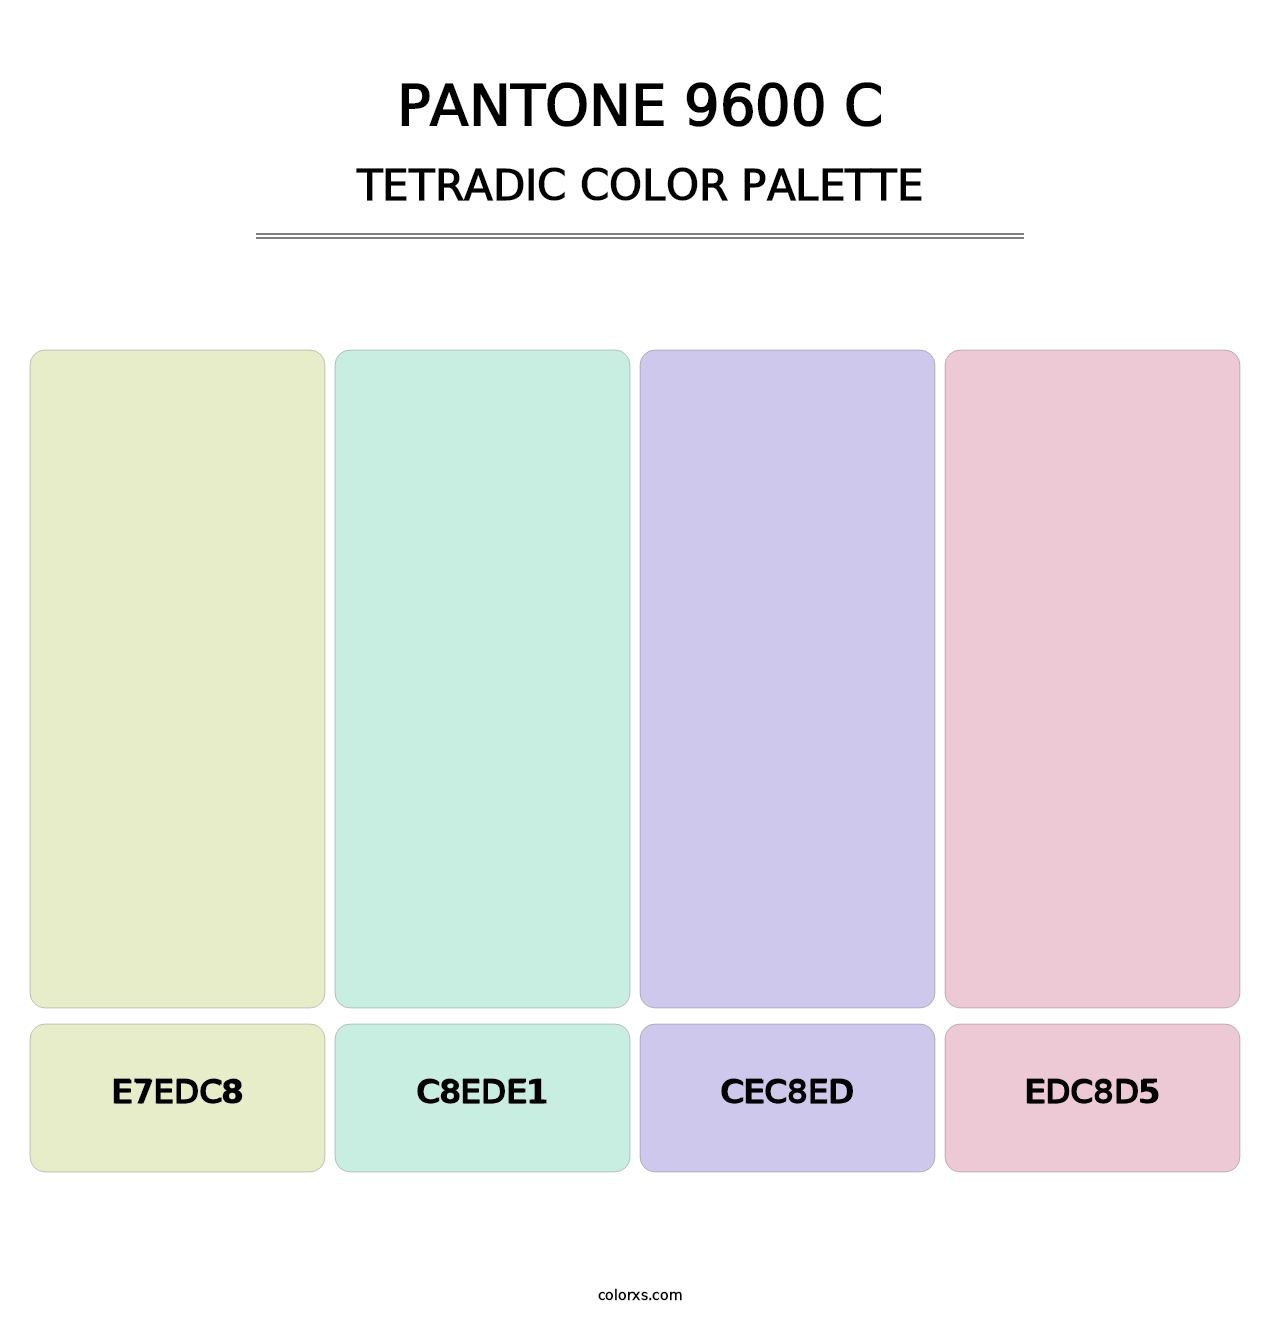 PANTONE 9600 C - Tetradic Color Palette